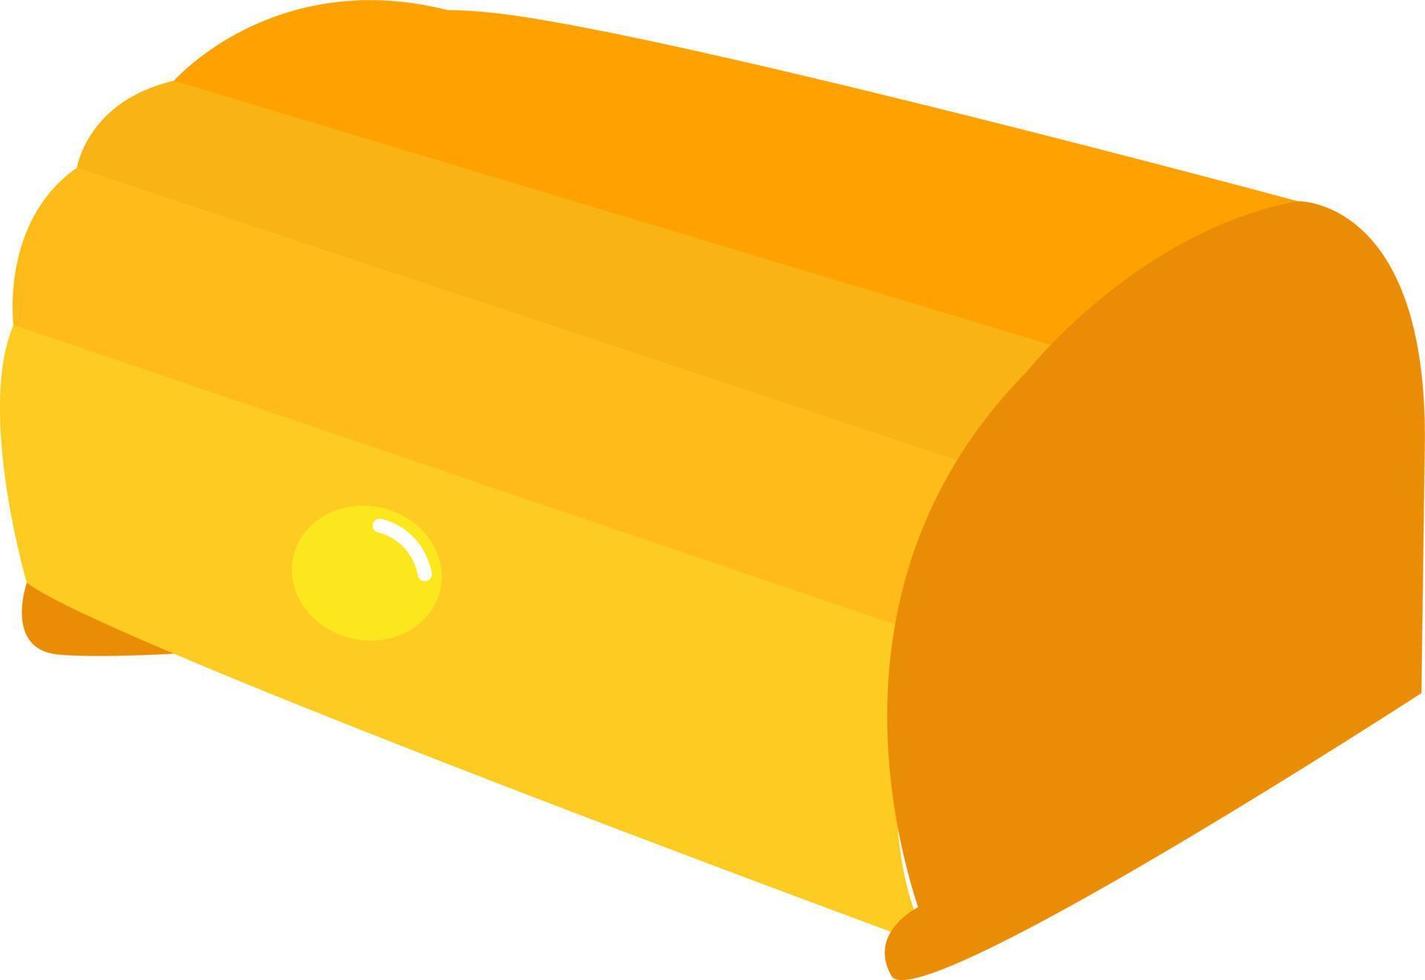 Bread box, illustration, vector on white background.